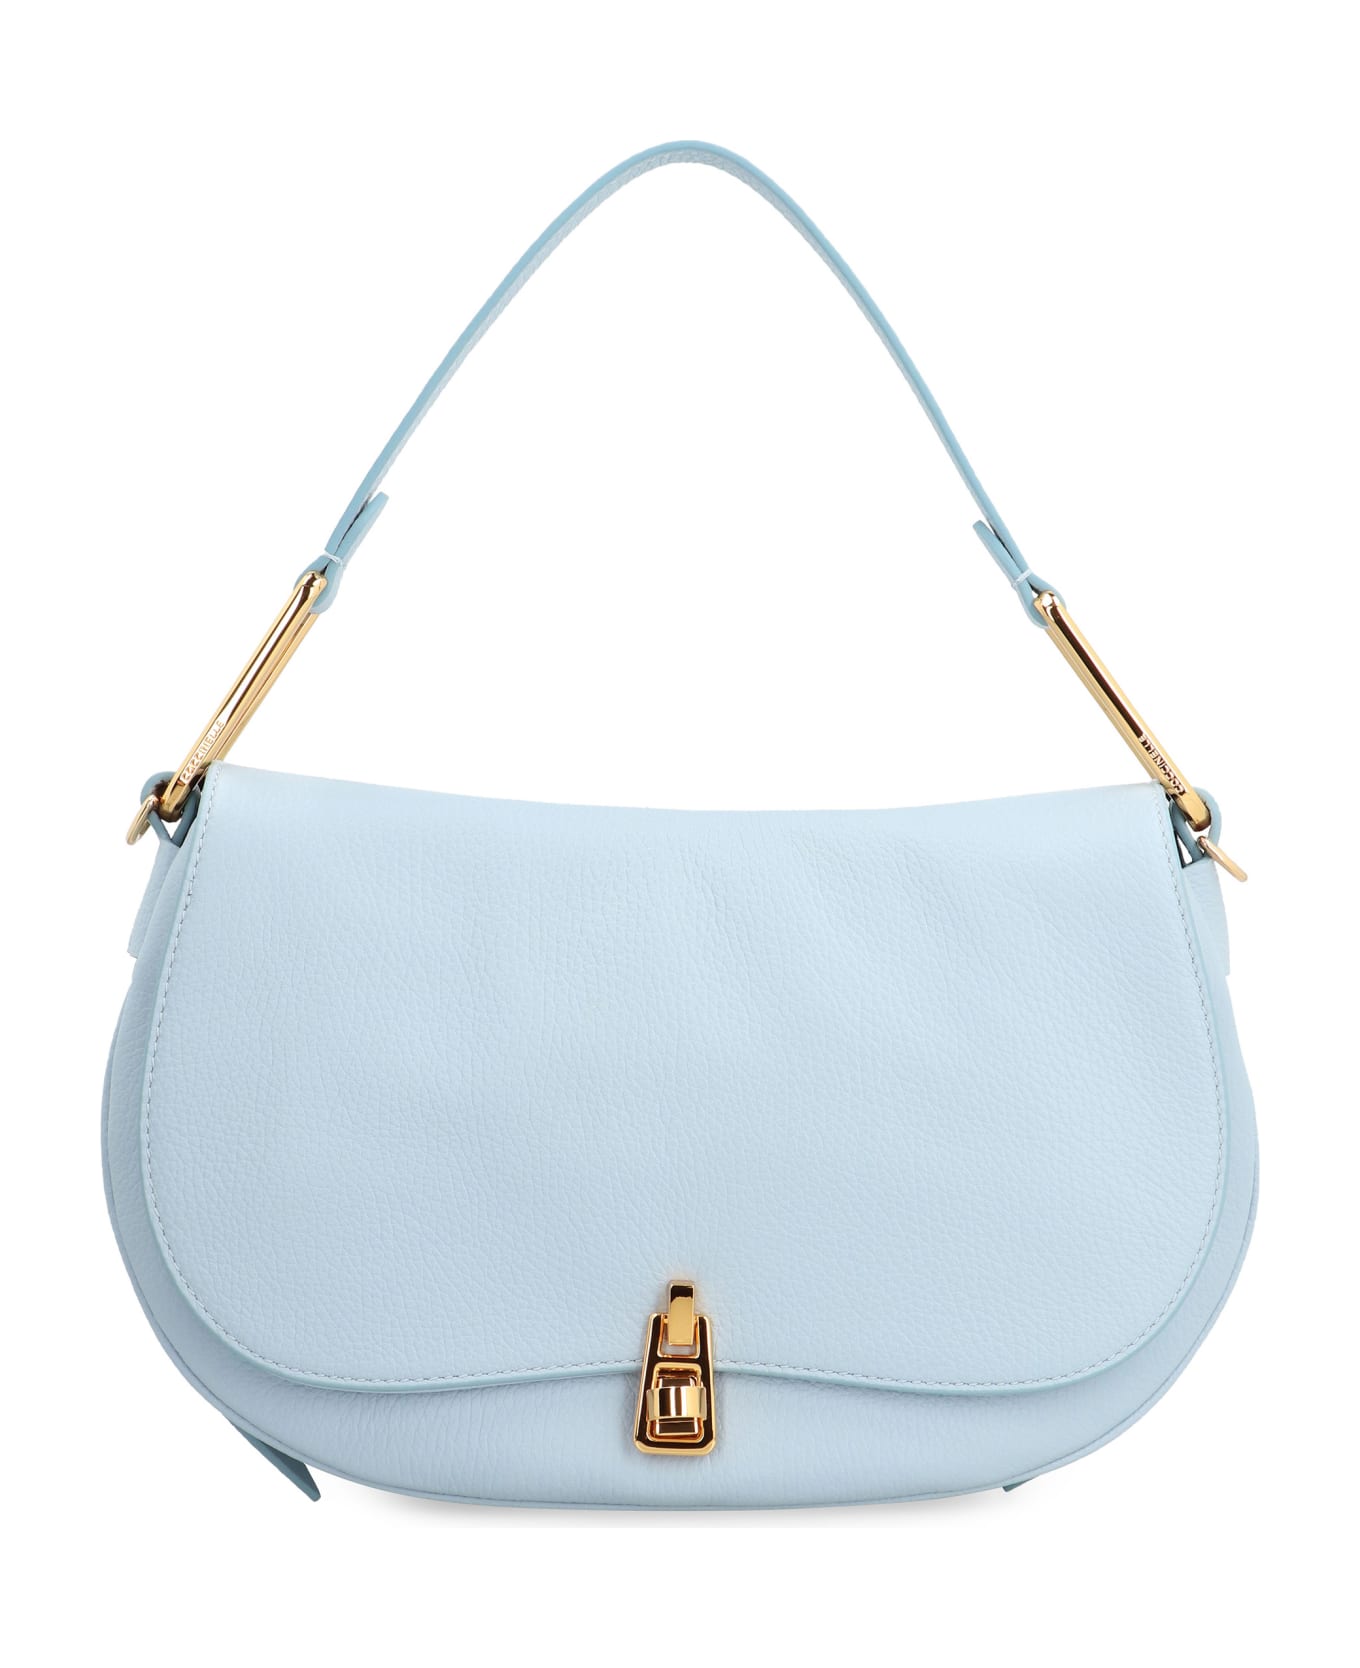 Coccinelle Magie Soft Leather Handbag - Light Blue